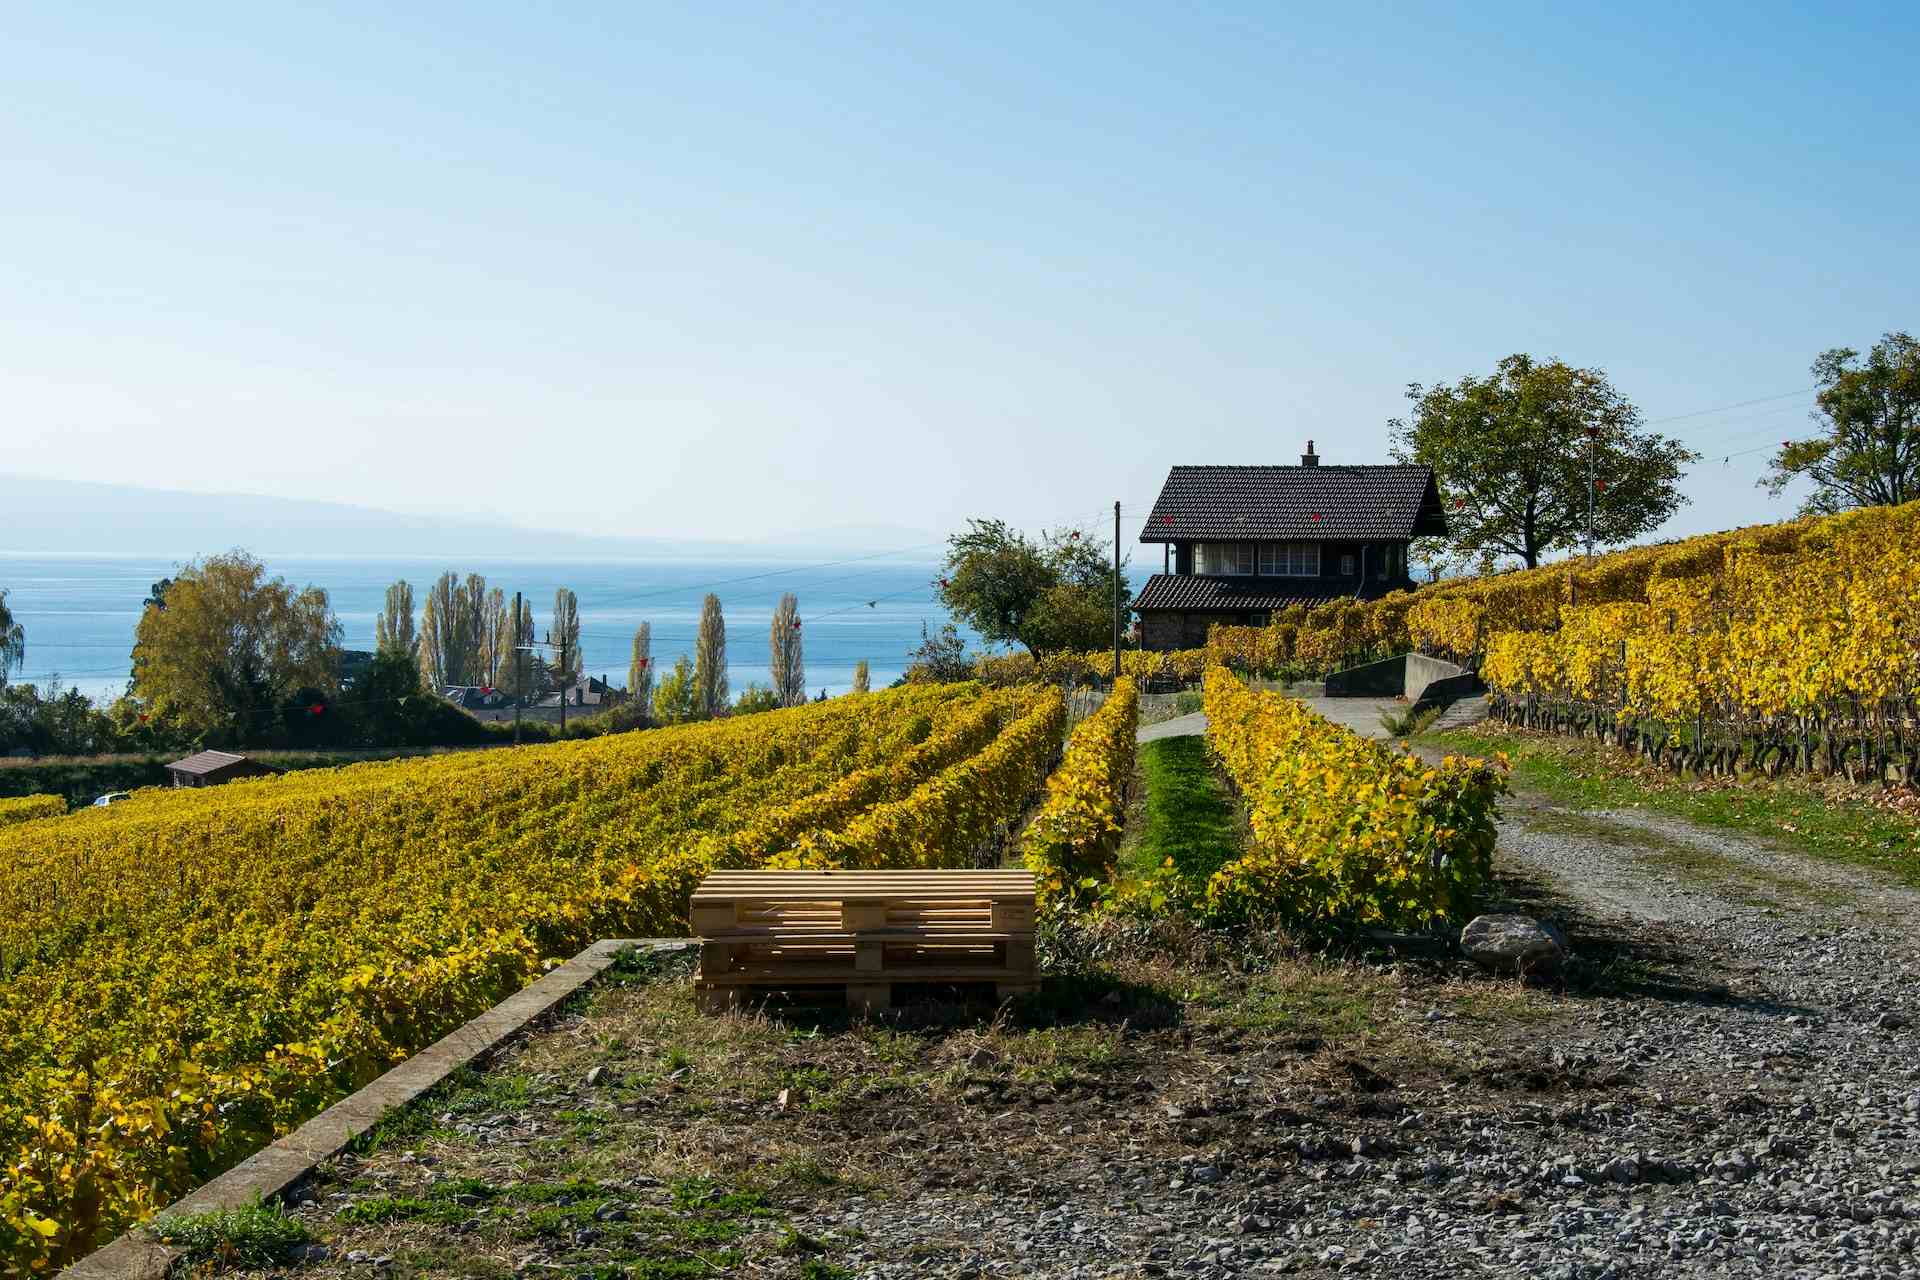 Les miels Brunet, produttore nel La Sarraz canton Vaud in Svizzera